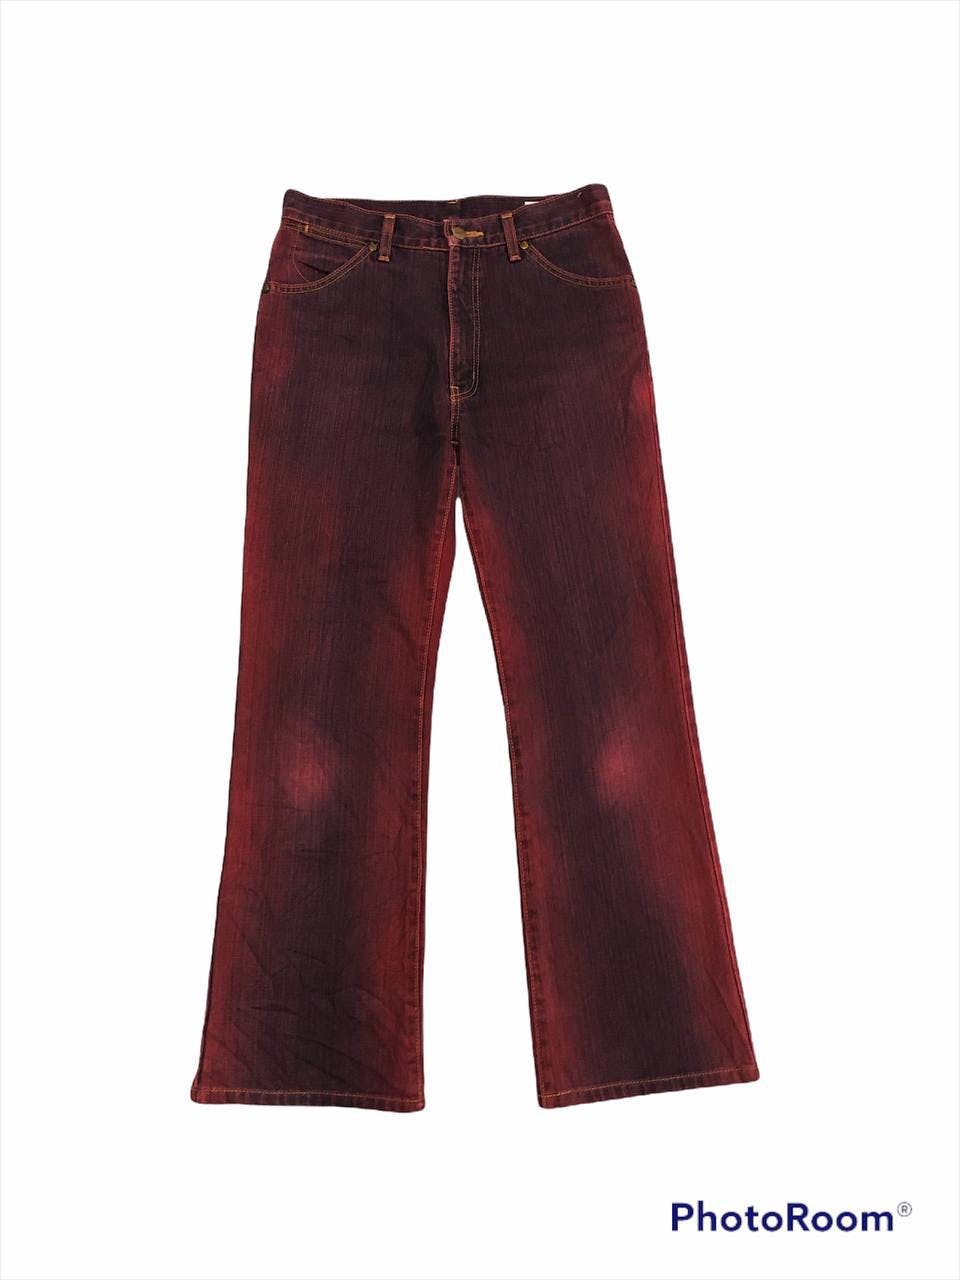 Vintage Wrangler Faded Marron Denim Pants - 1